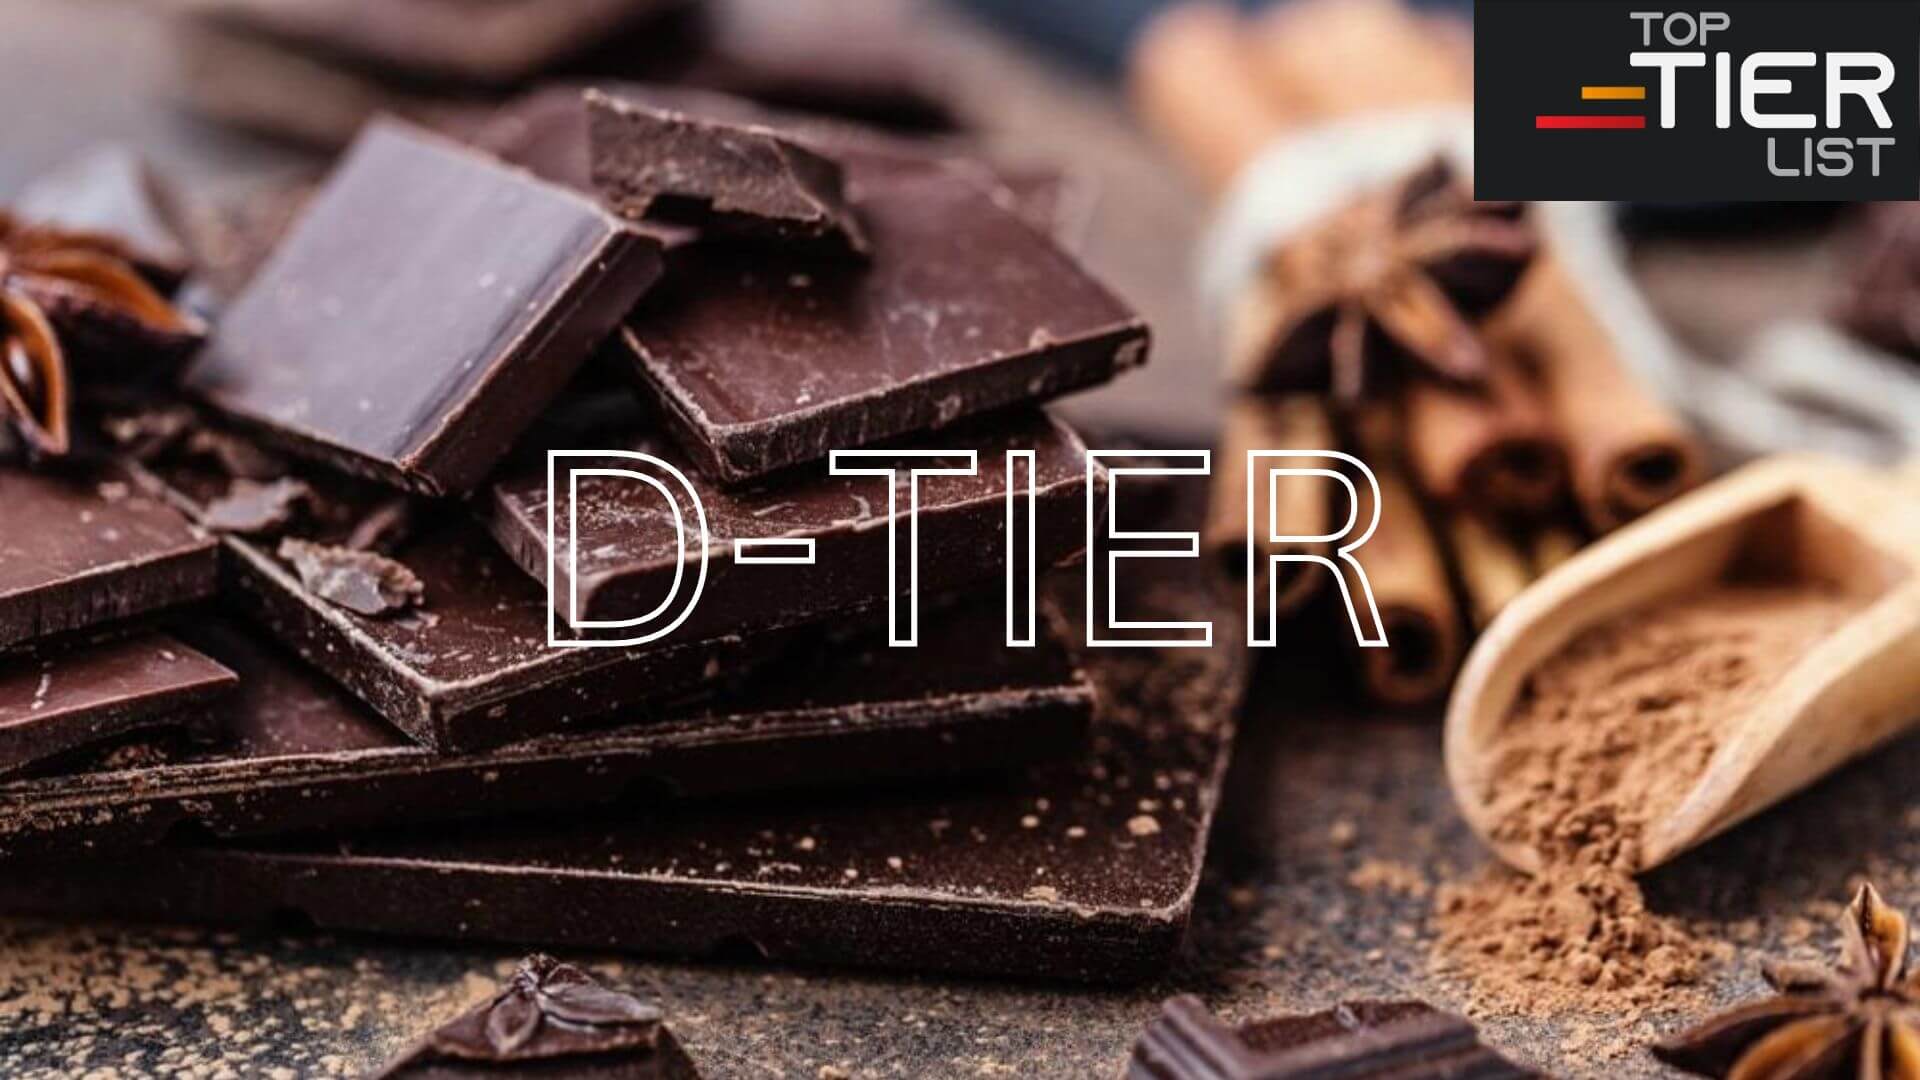 D tier chocolates